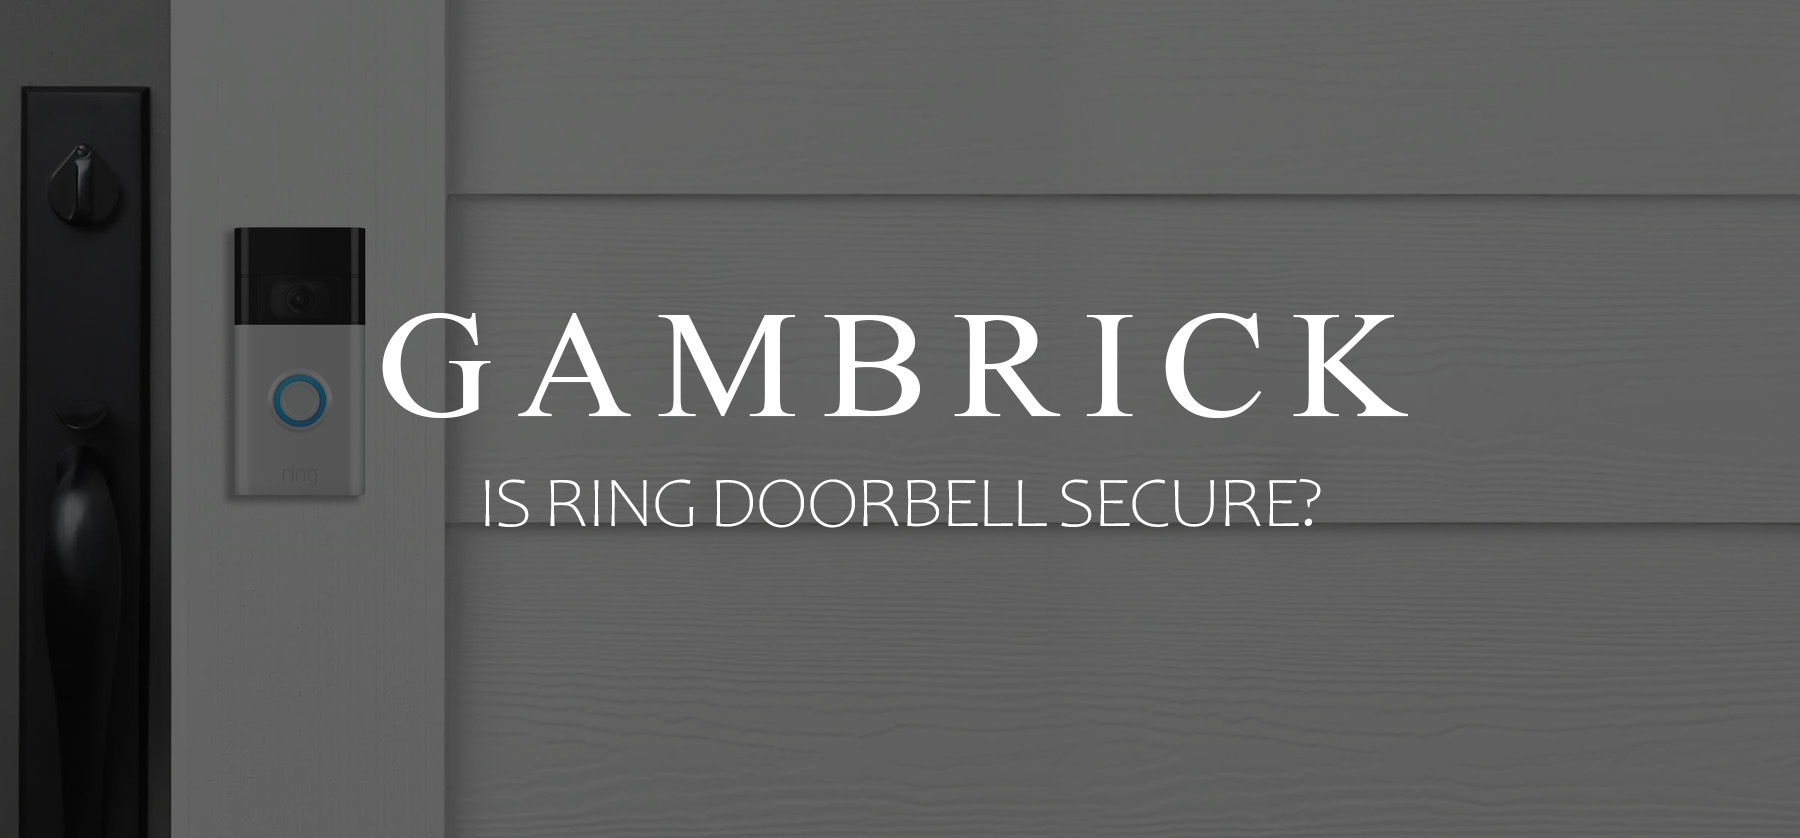 Is Ring doorbell secure banner 1.0